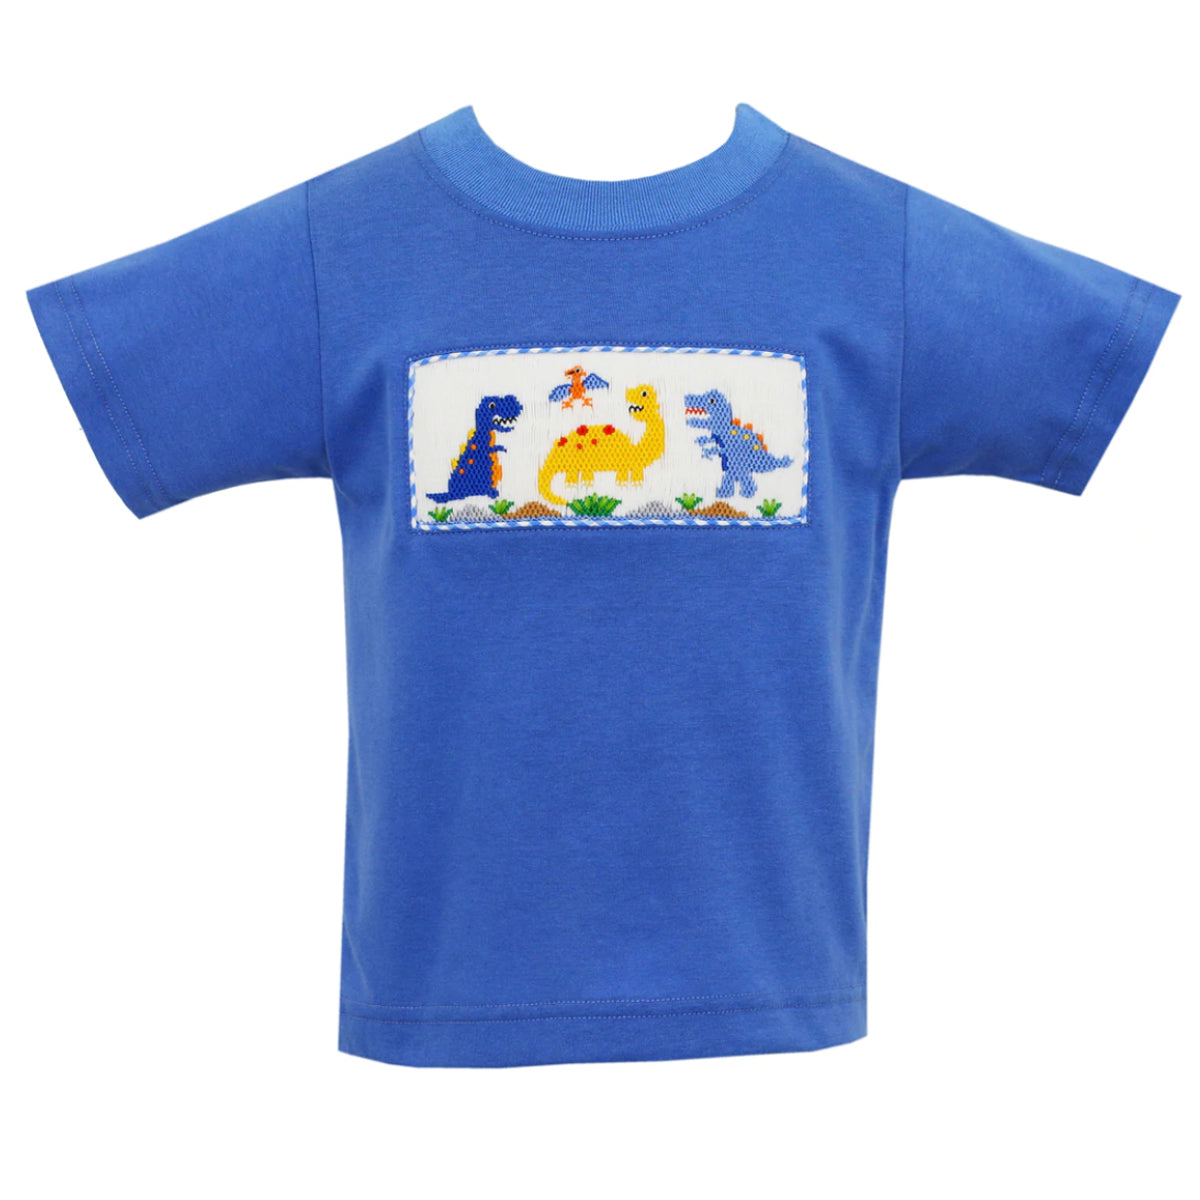 Periblue Knit Boy's Dinosaur T-Shirt